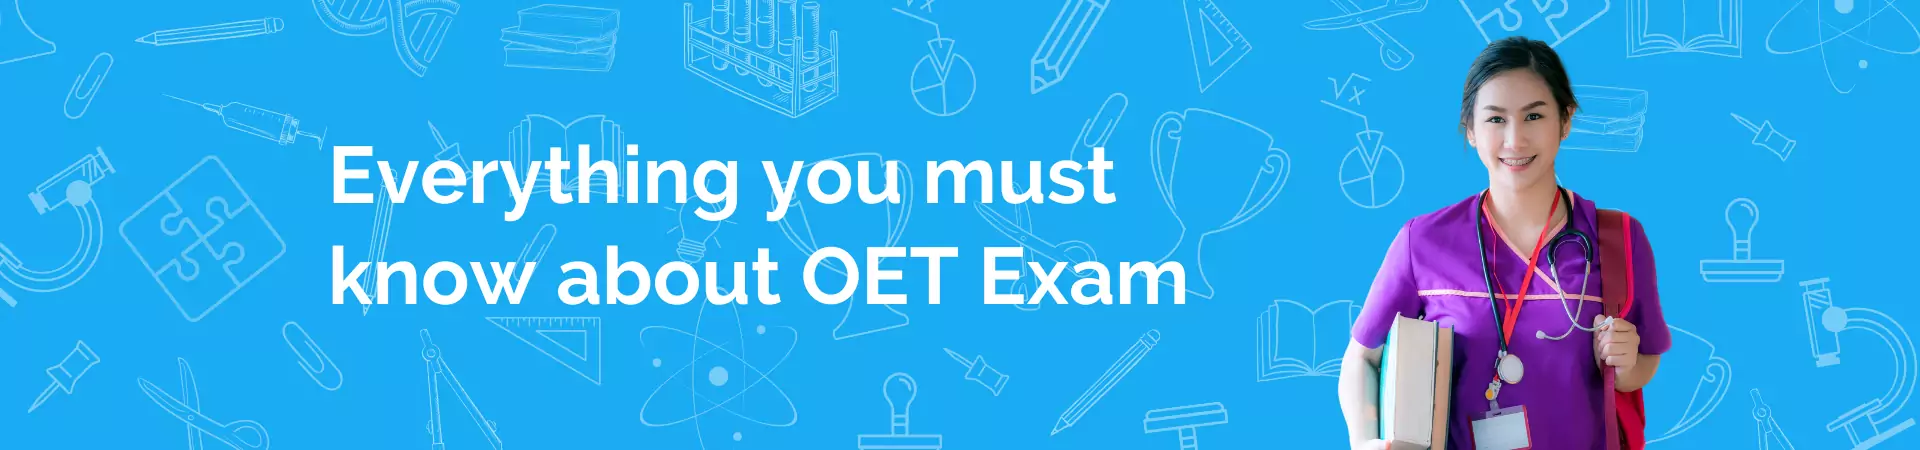 OET exams - Vietnam